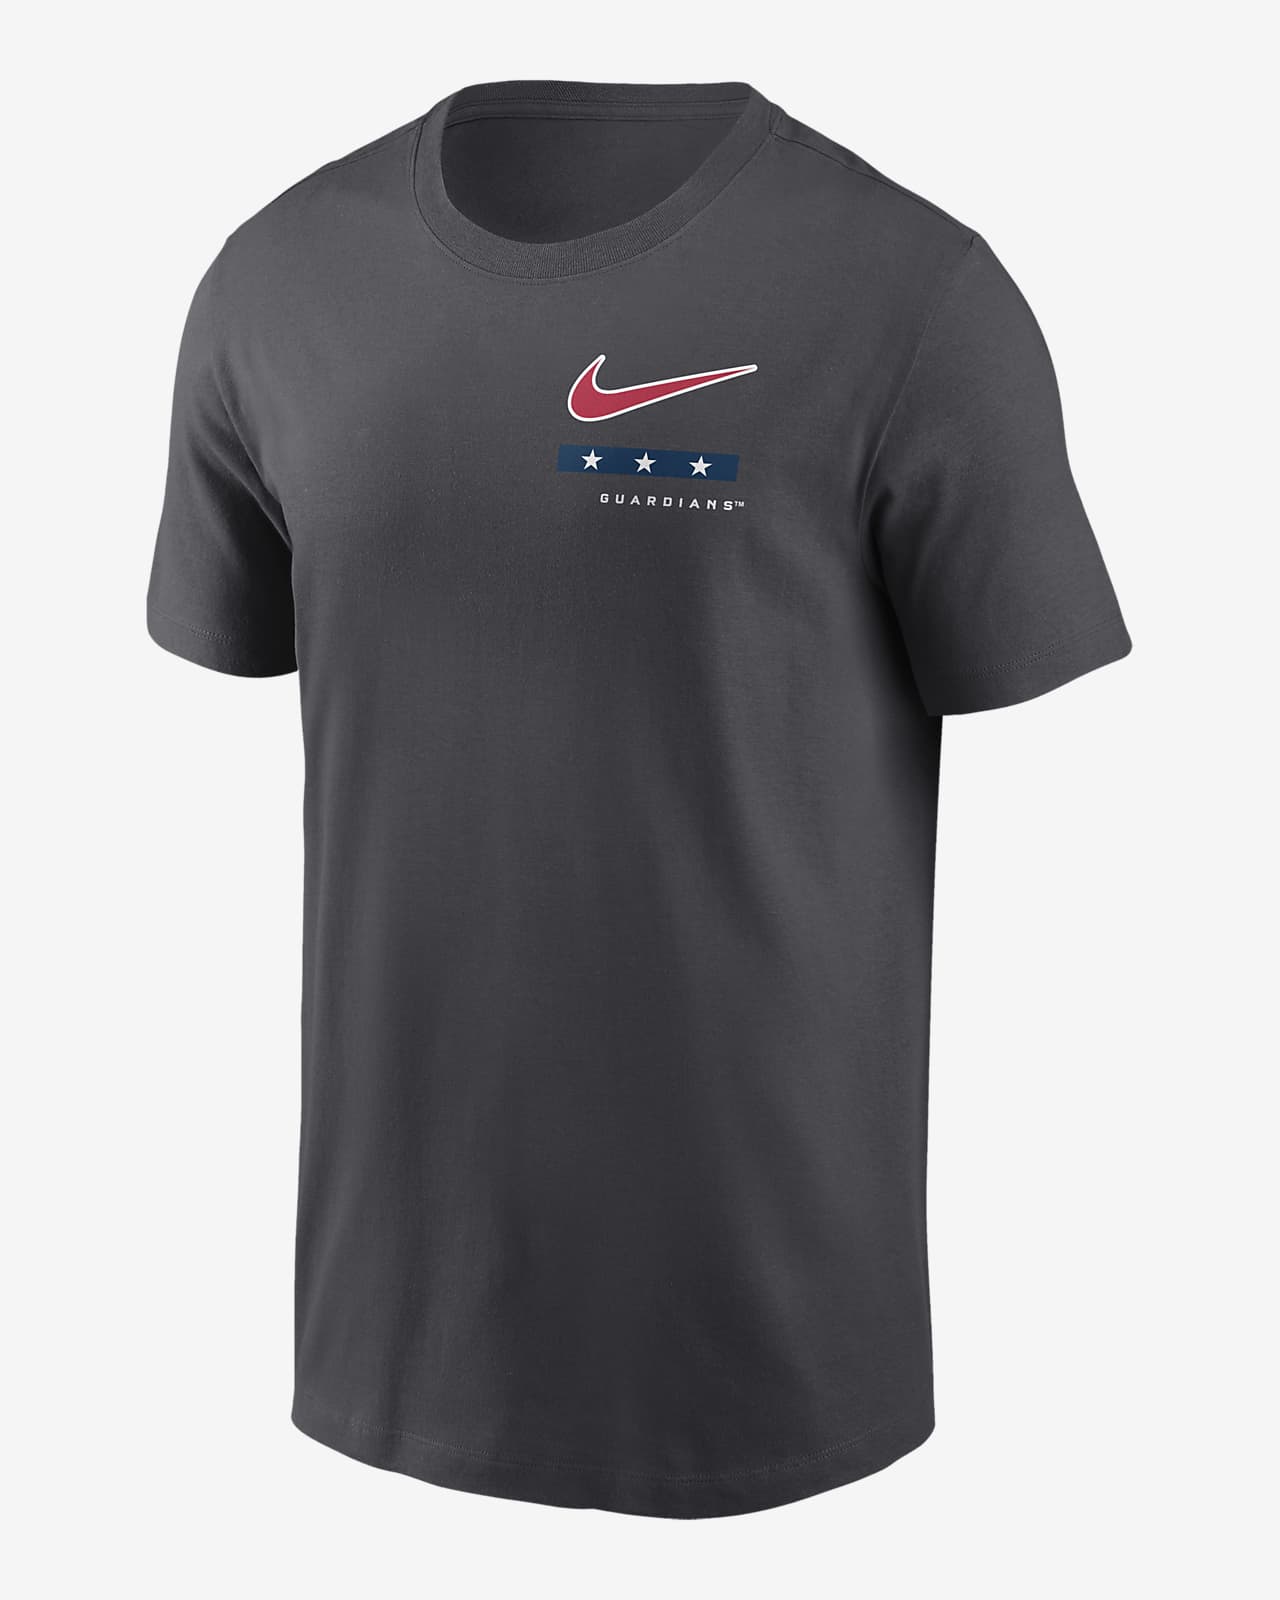 Cleveland Guardians Americana Men's Nike MLB T-Shirt.